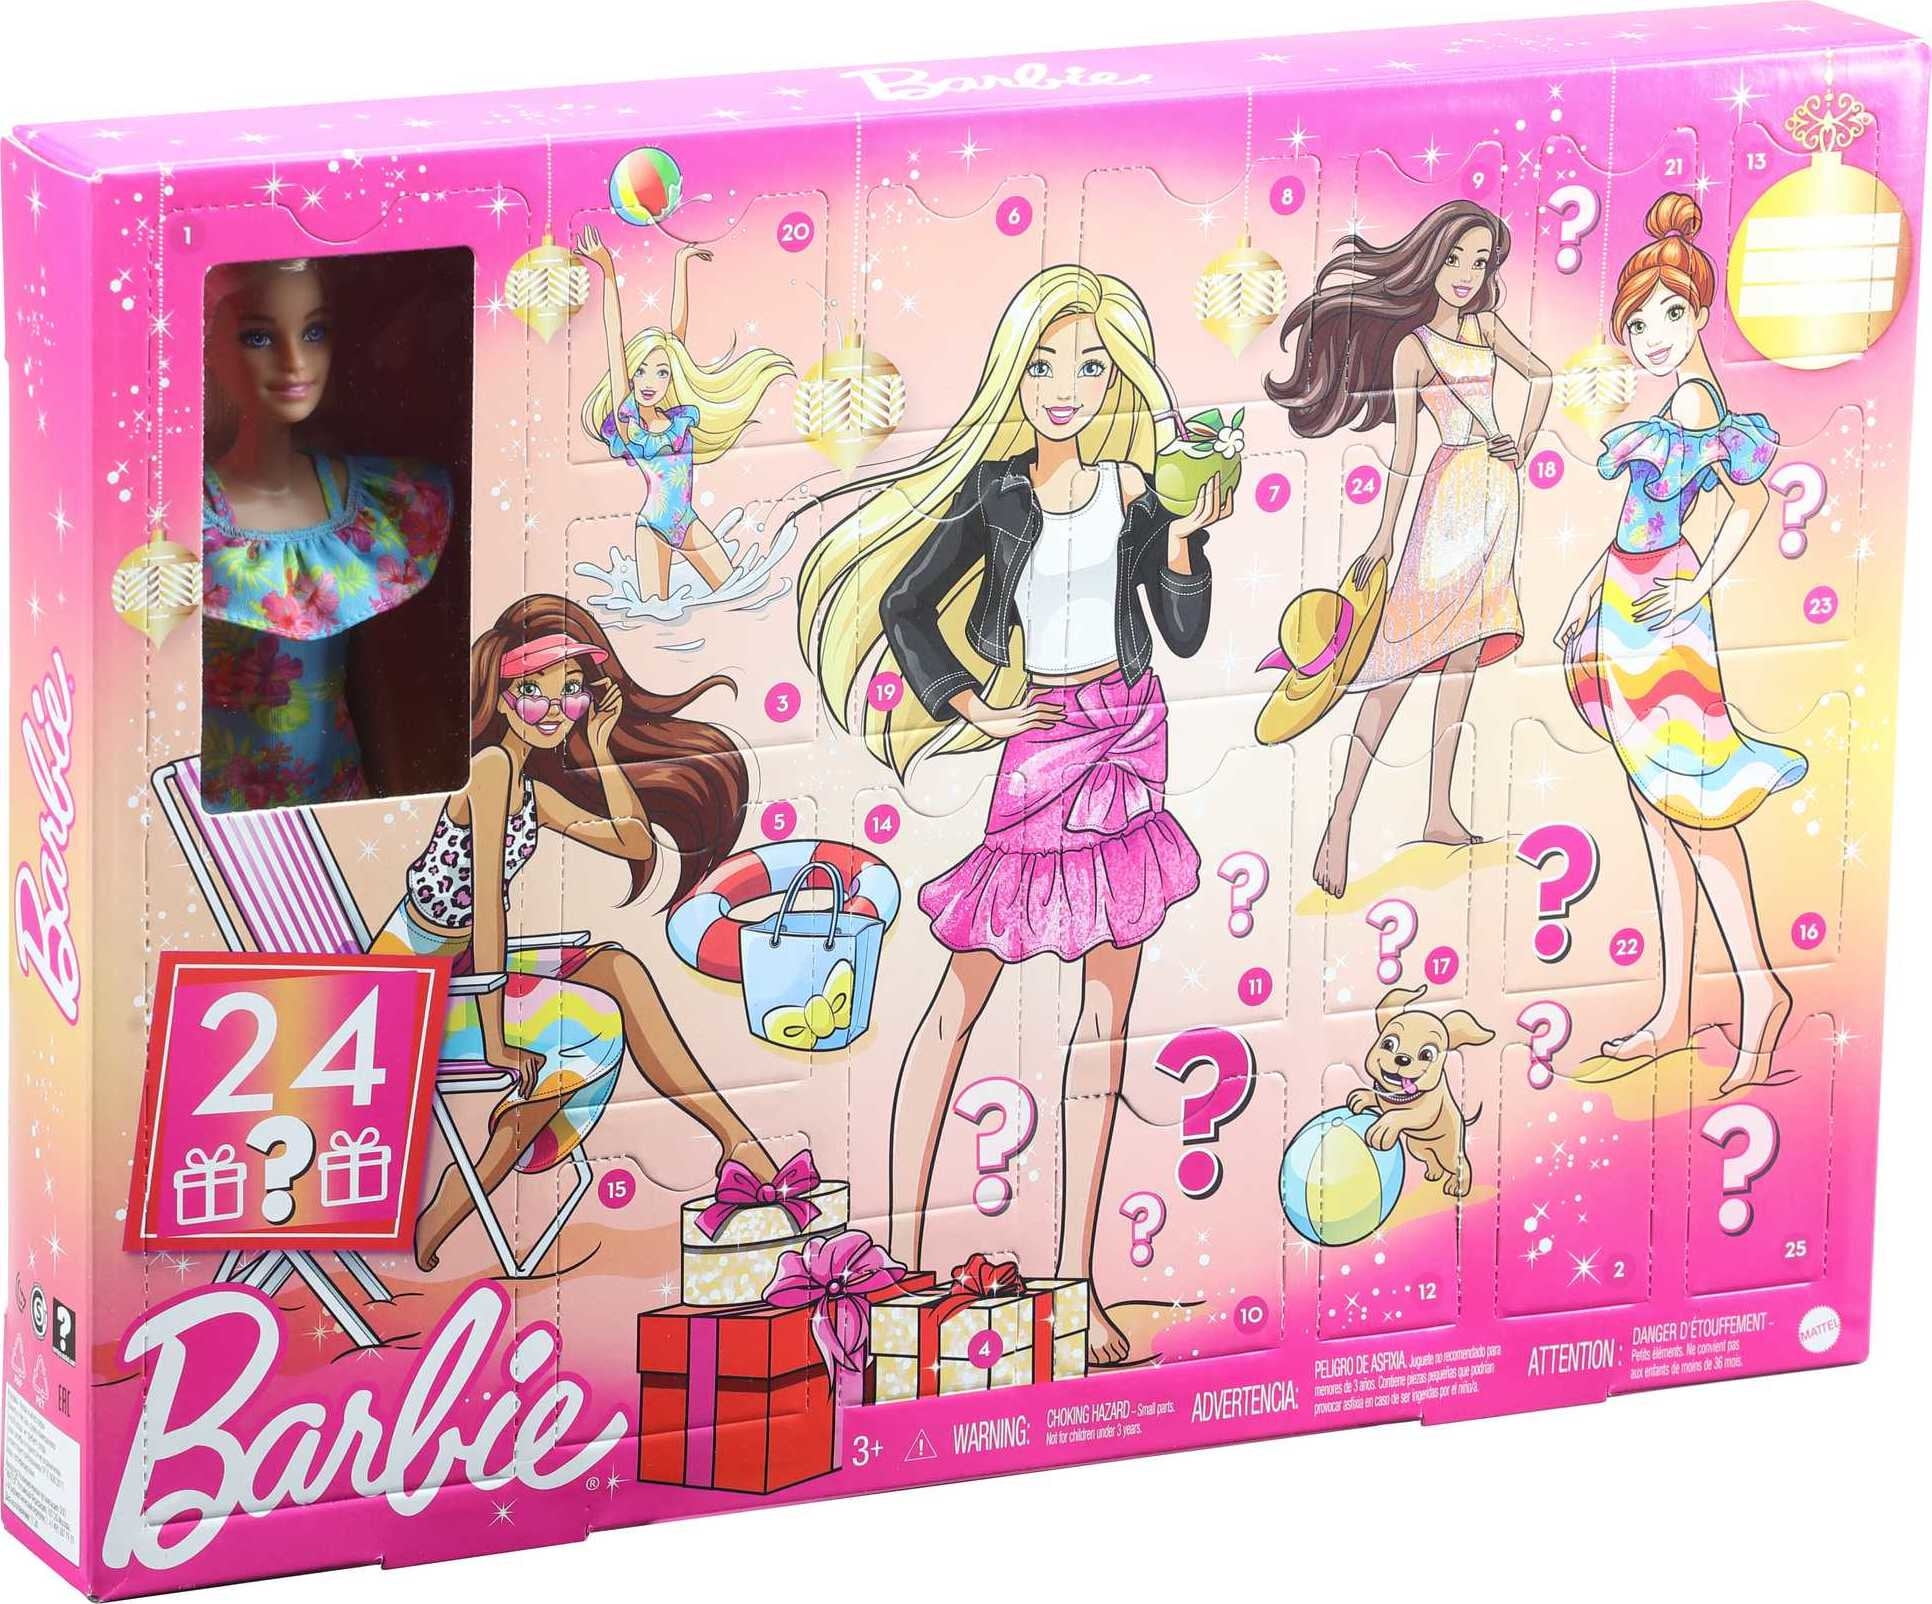 Barbie Advent Calendar 2008  Barbie advent calendar, Barbie, Barbie girl